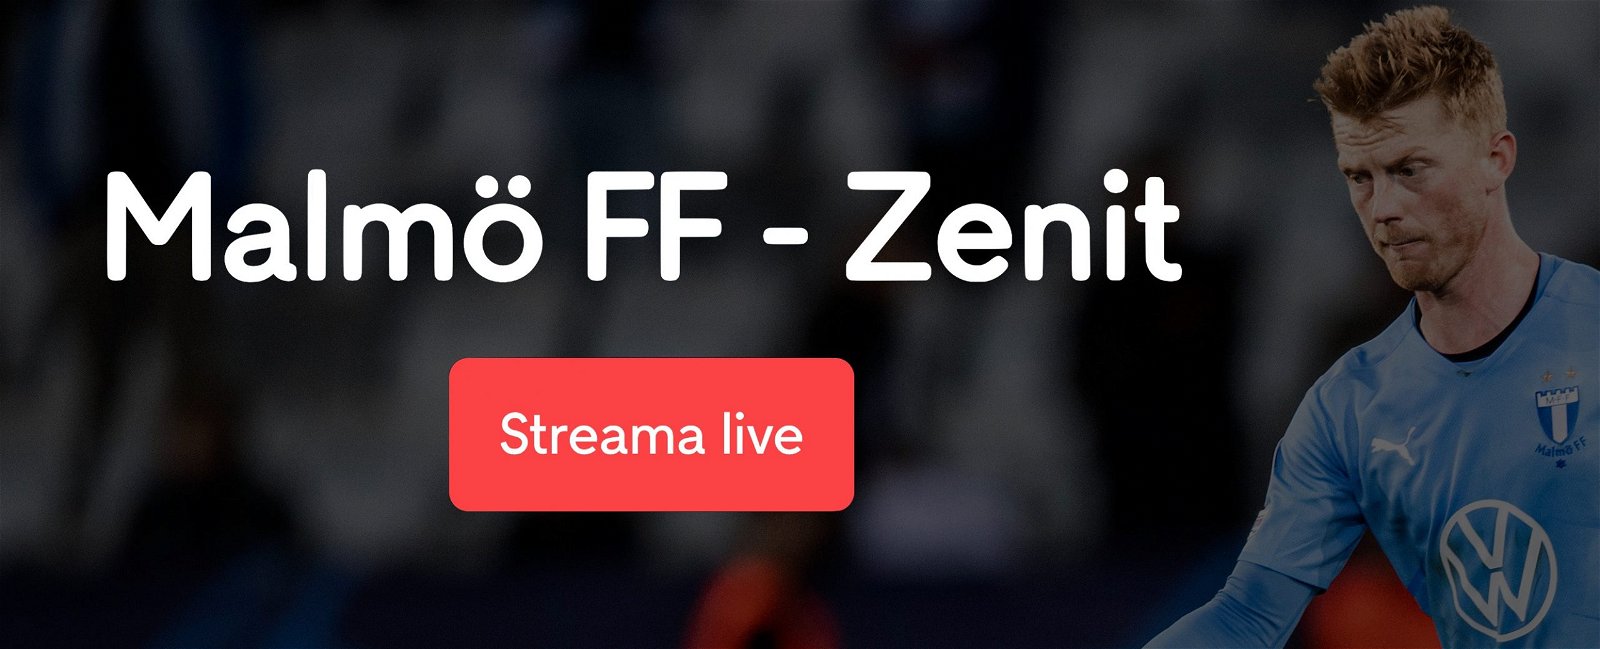 Malmö FF Zenit TV kanal - så kan du se Malmö FF Zenit på TV!